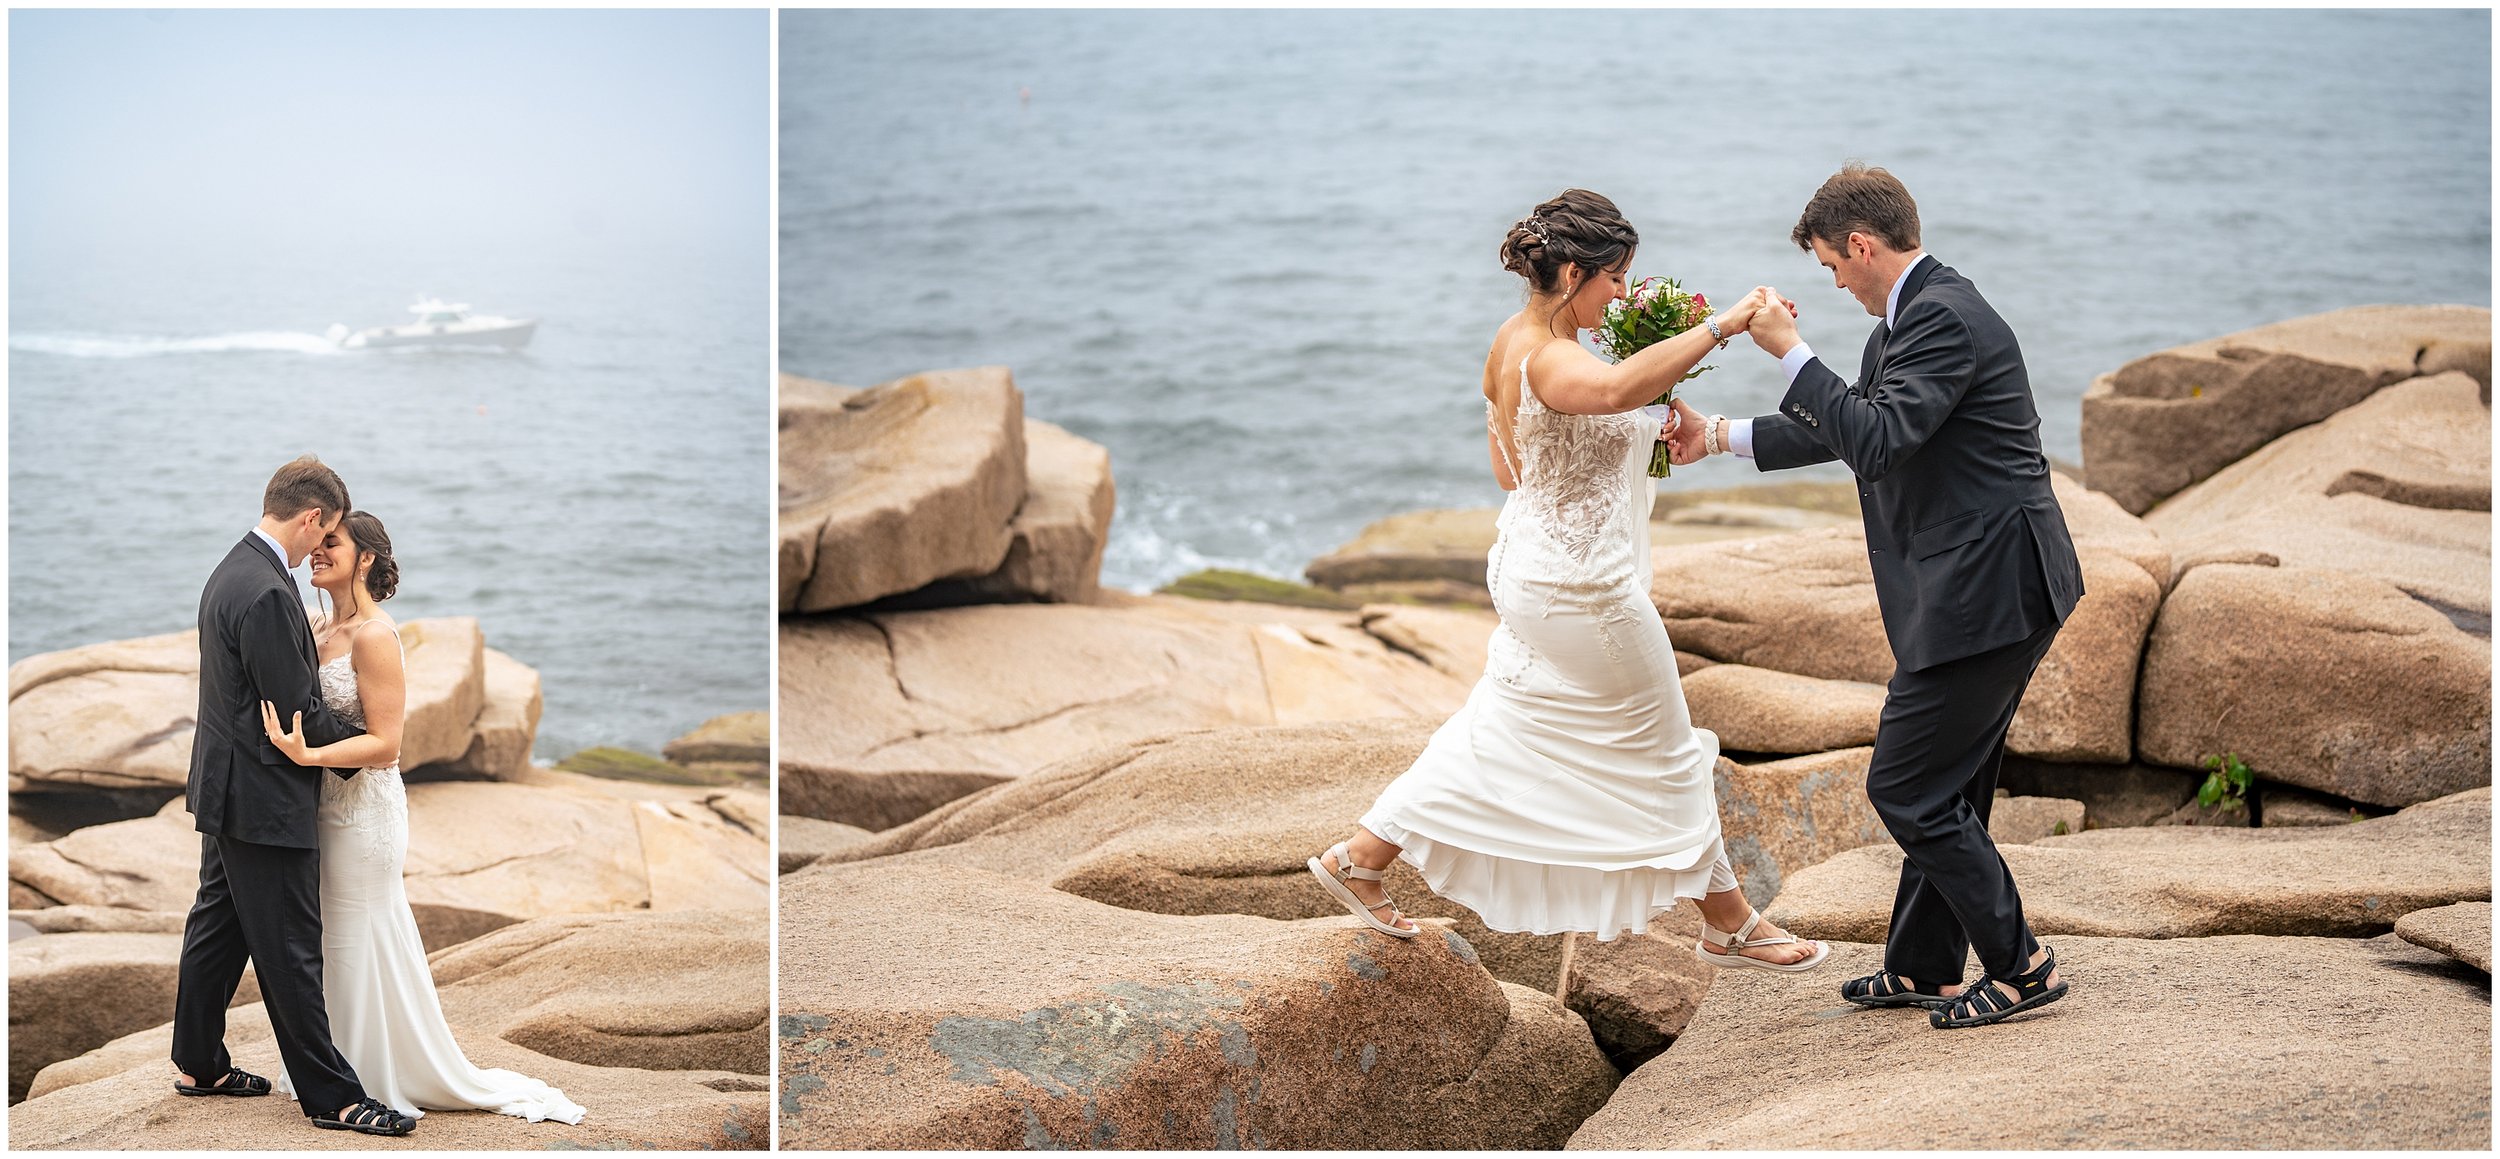 Bar Harbor Maine Wedding Photographers, Acadia National Park Wedding Photographer, Two Adventurous Souls- 061523_0019.jpg